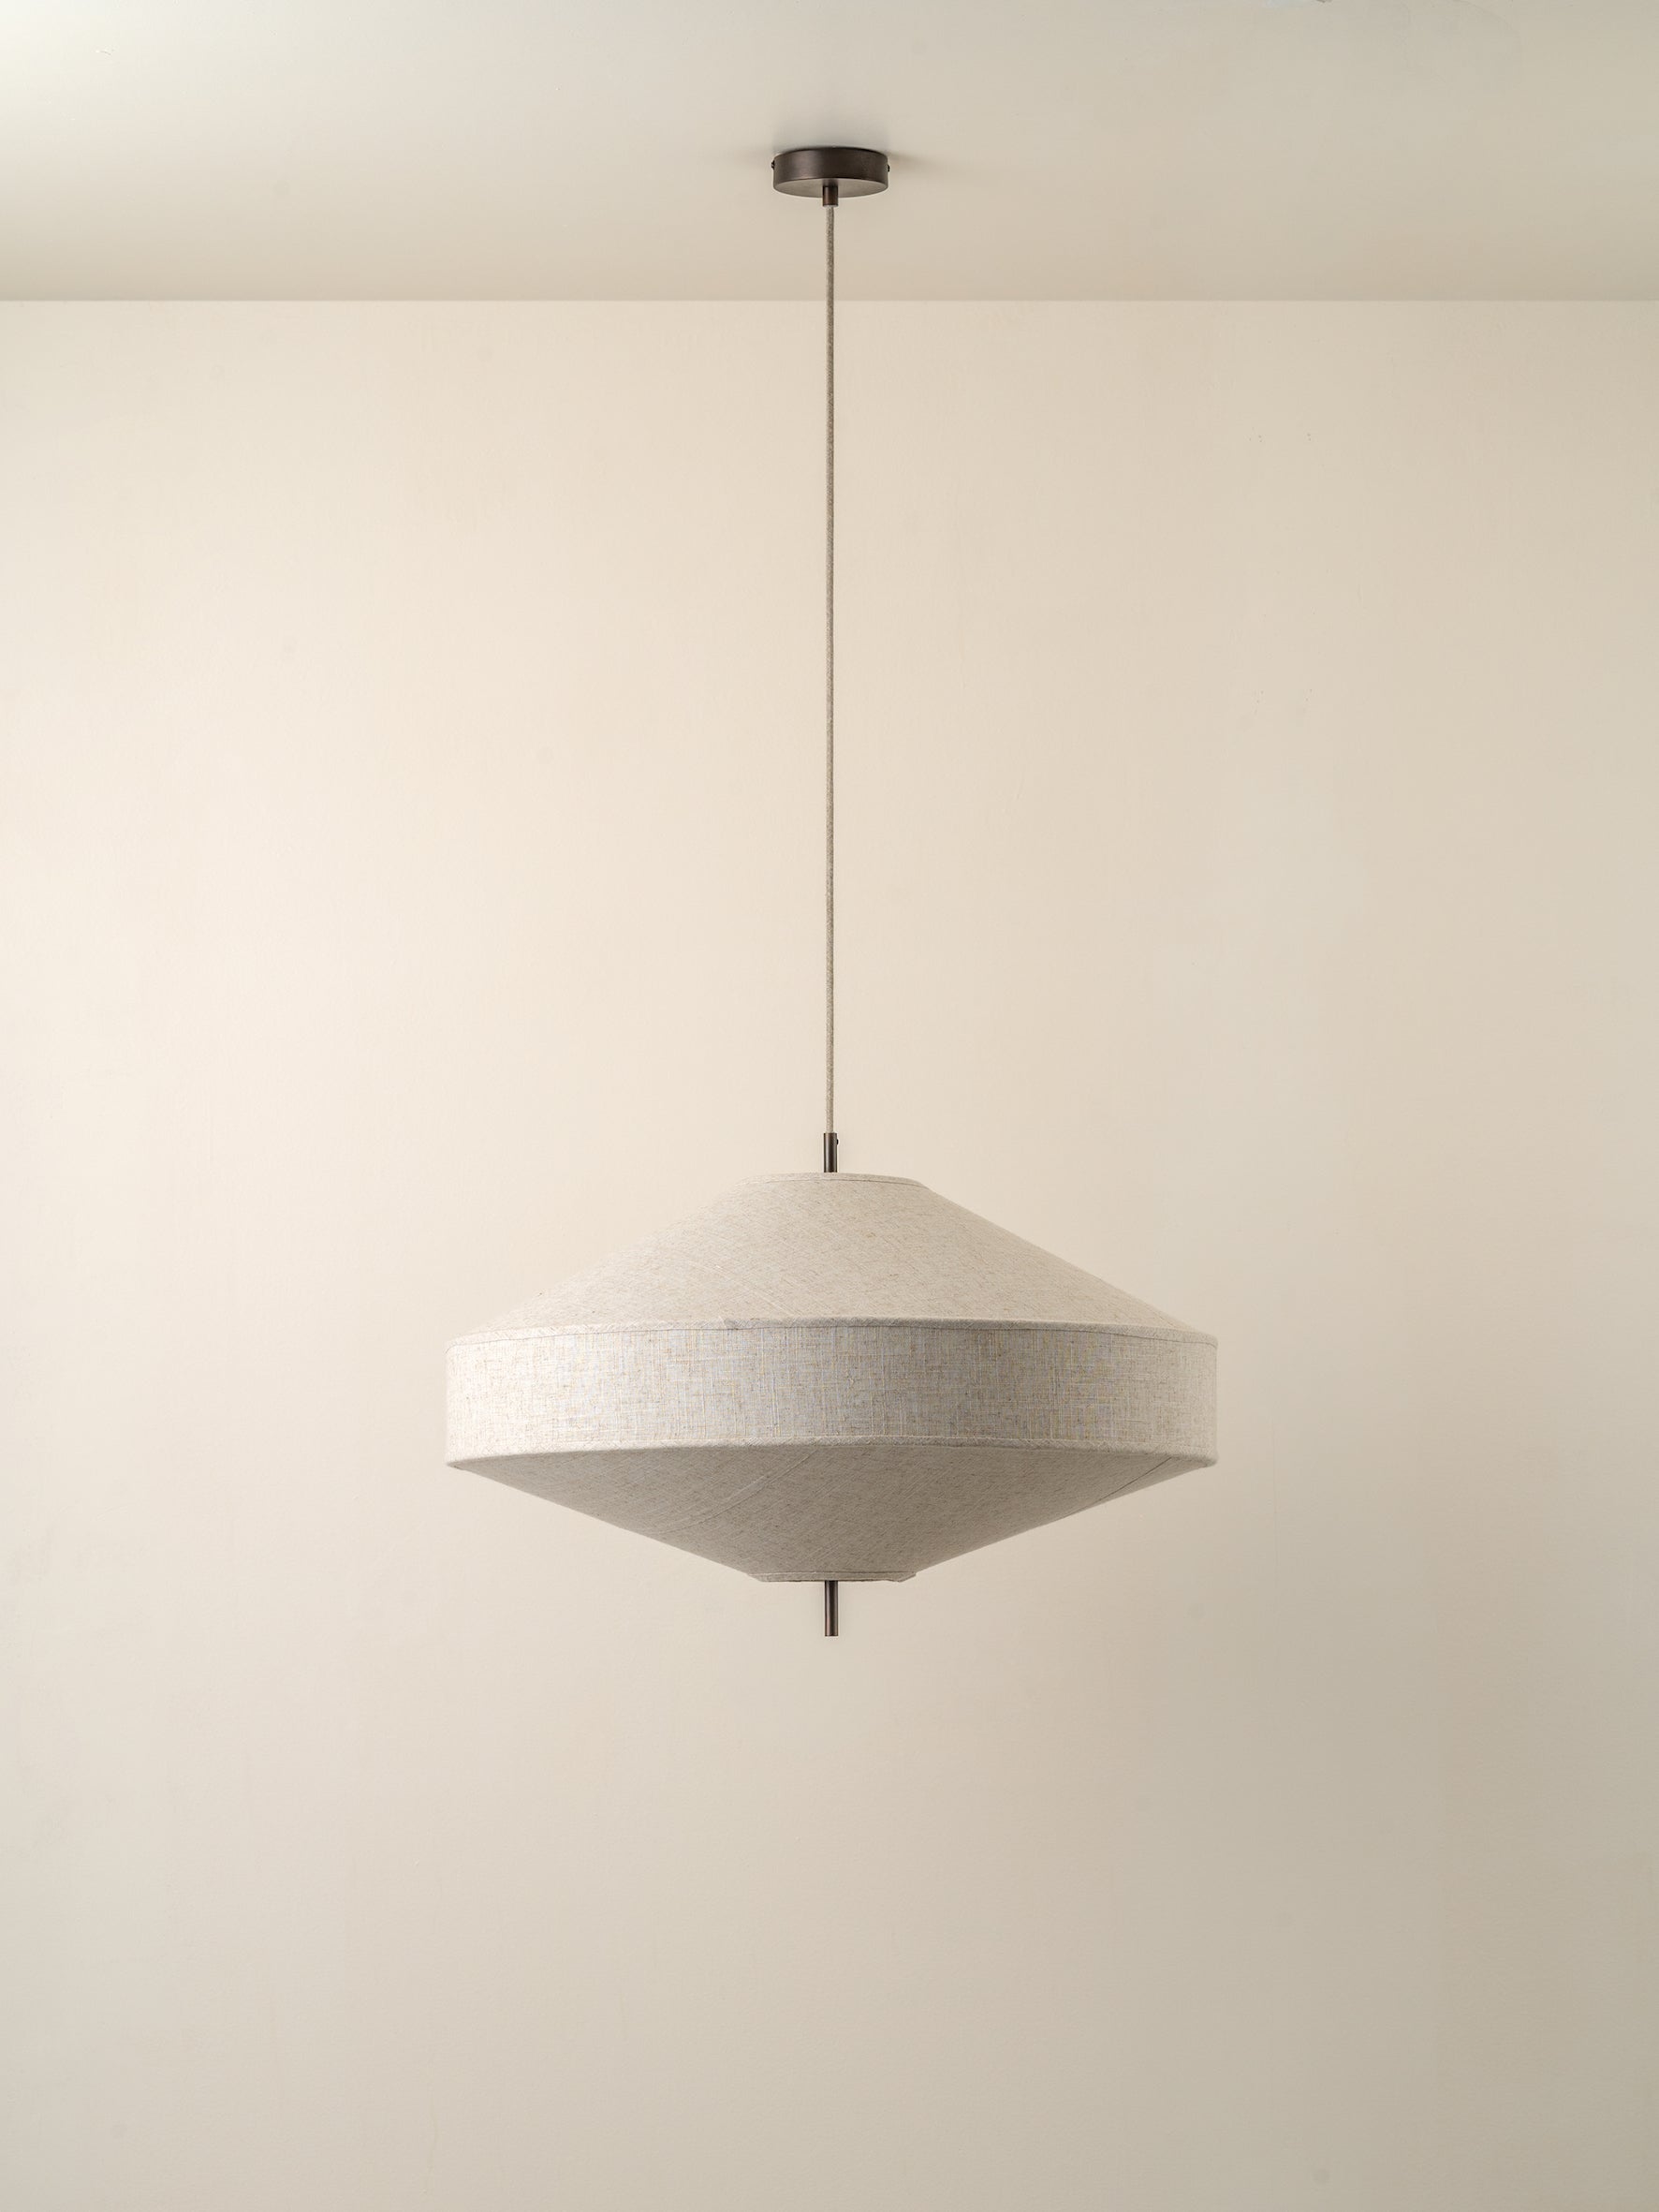 Solara - large aged brass and layered natural linen pendant | Ceiling Light | Lights & Lamps | UK | Modern Affordable Designer Lighting